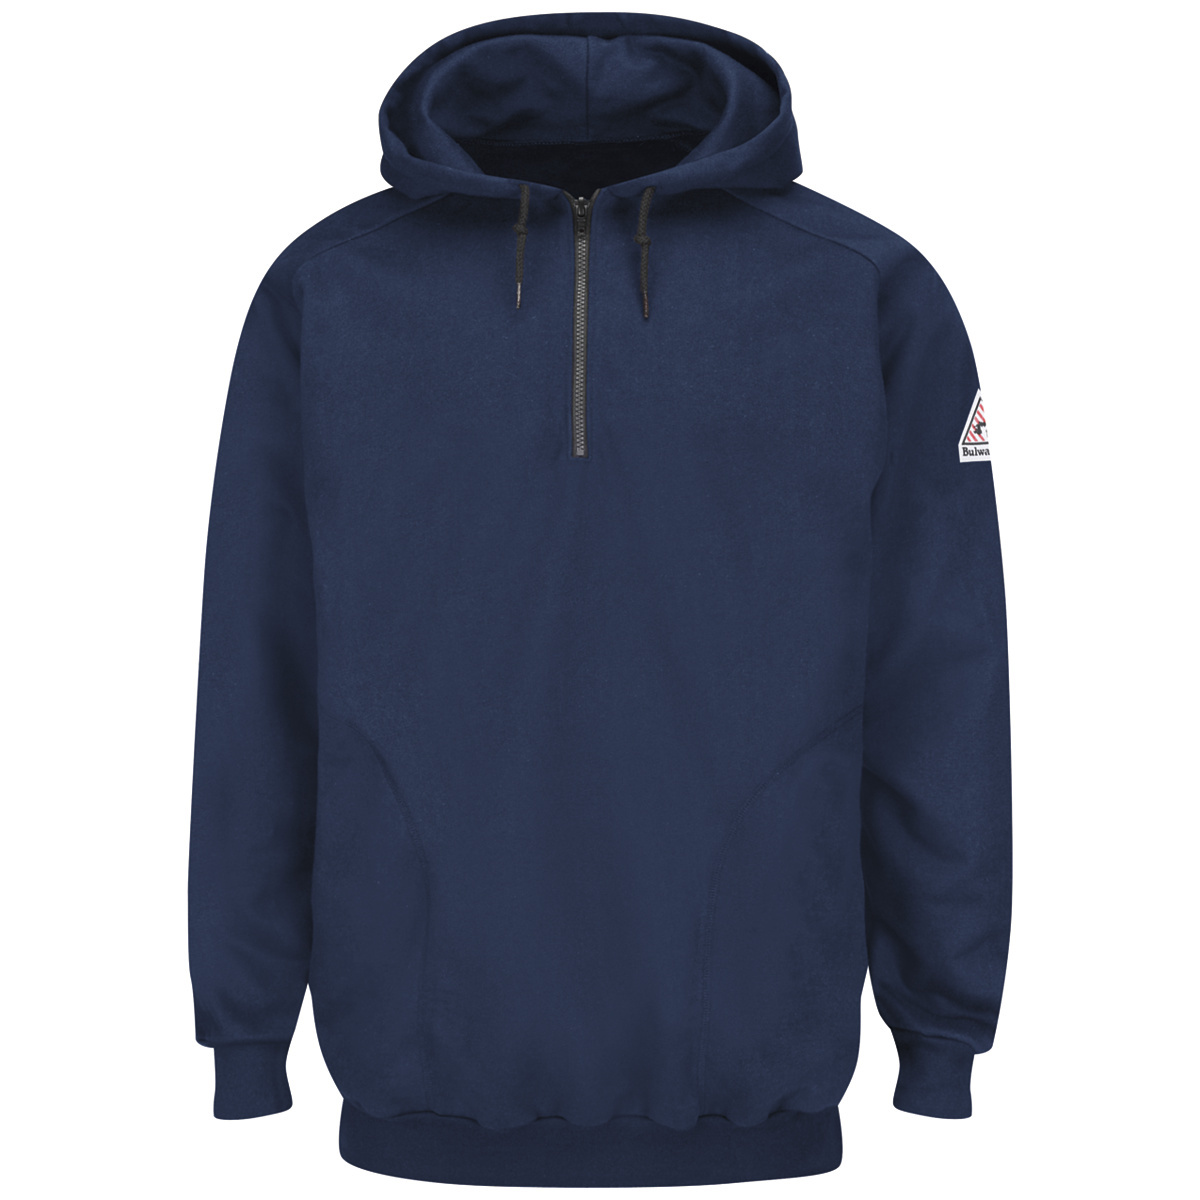 Bulwark® Medium Regular Navy Blue Cotton/Spandex Brushed Fleece Flame Resistant Hooded Sweatshirt